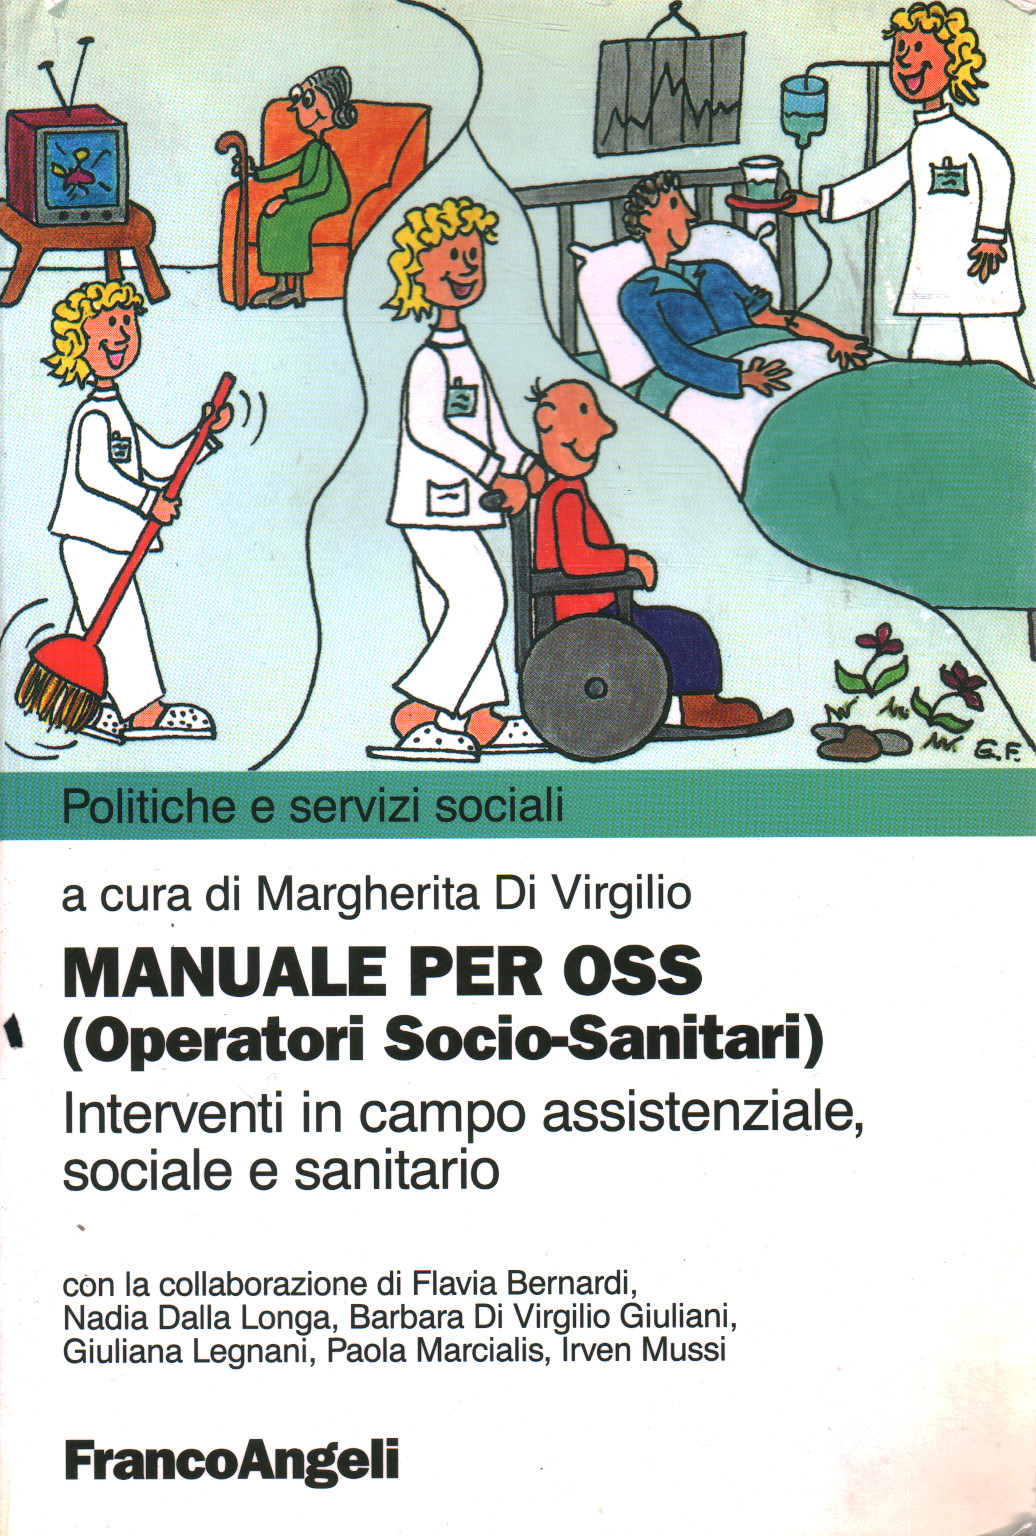 Manuale per OSS (Operatori Socio-Sanitari), s.a.